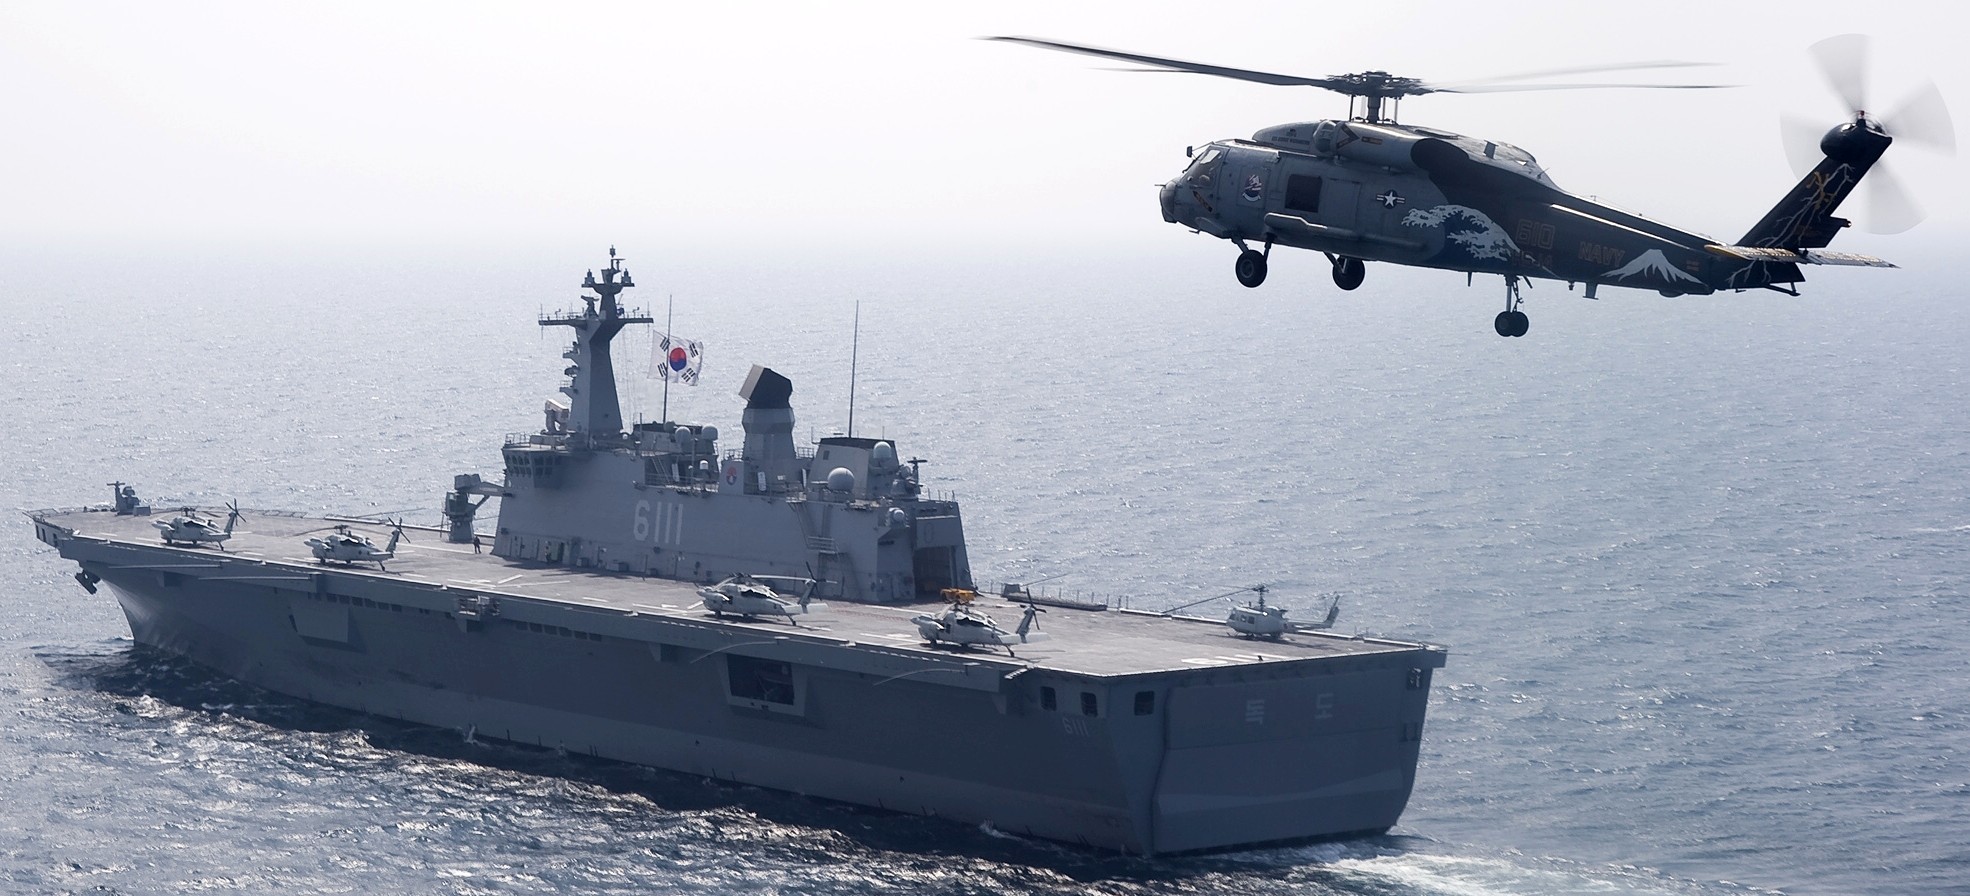 lph-6111 roks dokdo landing platform helicopter amphibious assault ship korean navy rokn 08 mh-60 seahawk